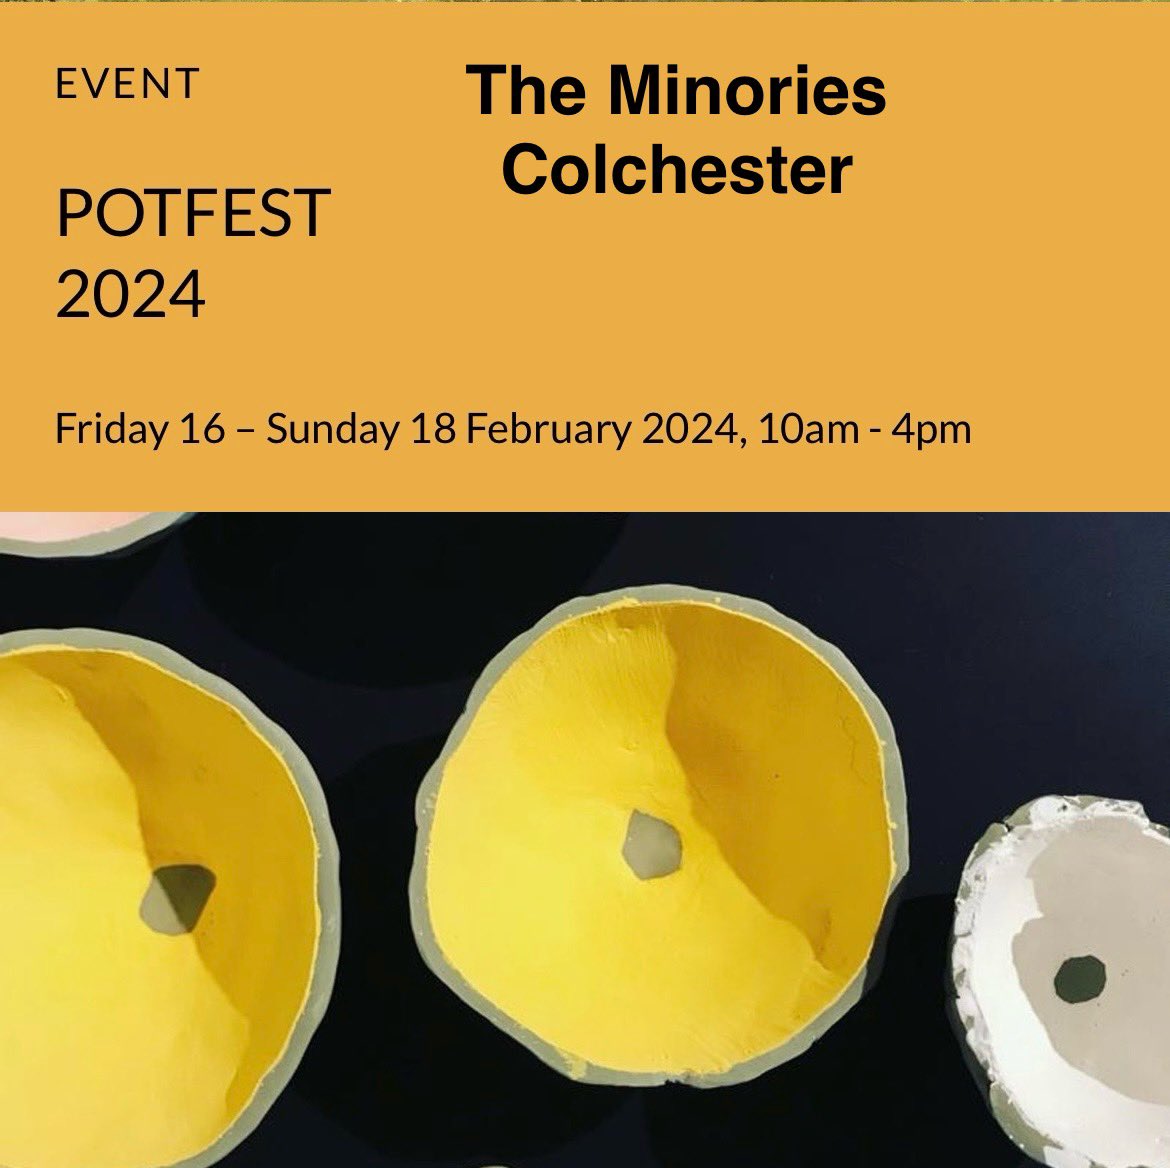 A weekend of ceramics in Colchester Minories starts tomorrow!
@BBCEssex @VisitColchester @WMerseaCC #essex #madeinessex @col_art_society
#CreativeColchester #ColchesterEvents #EssexEvents